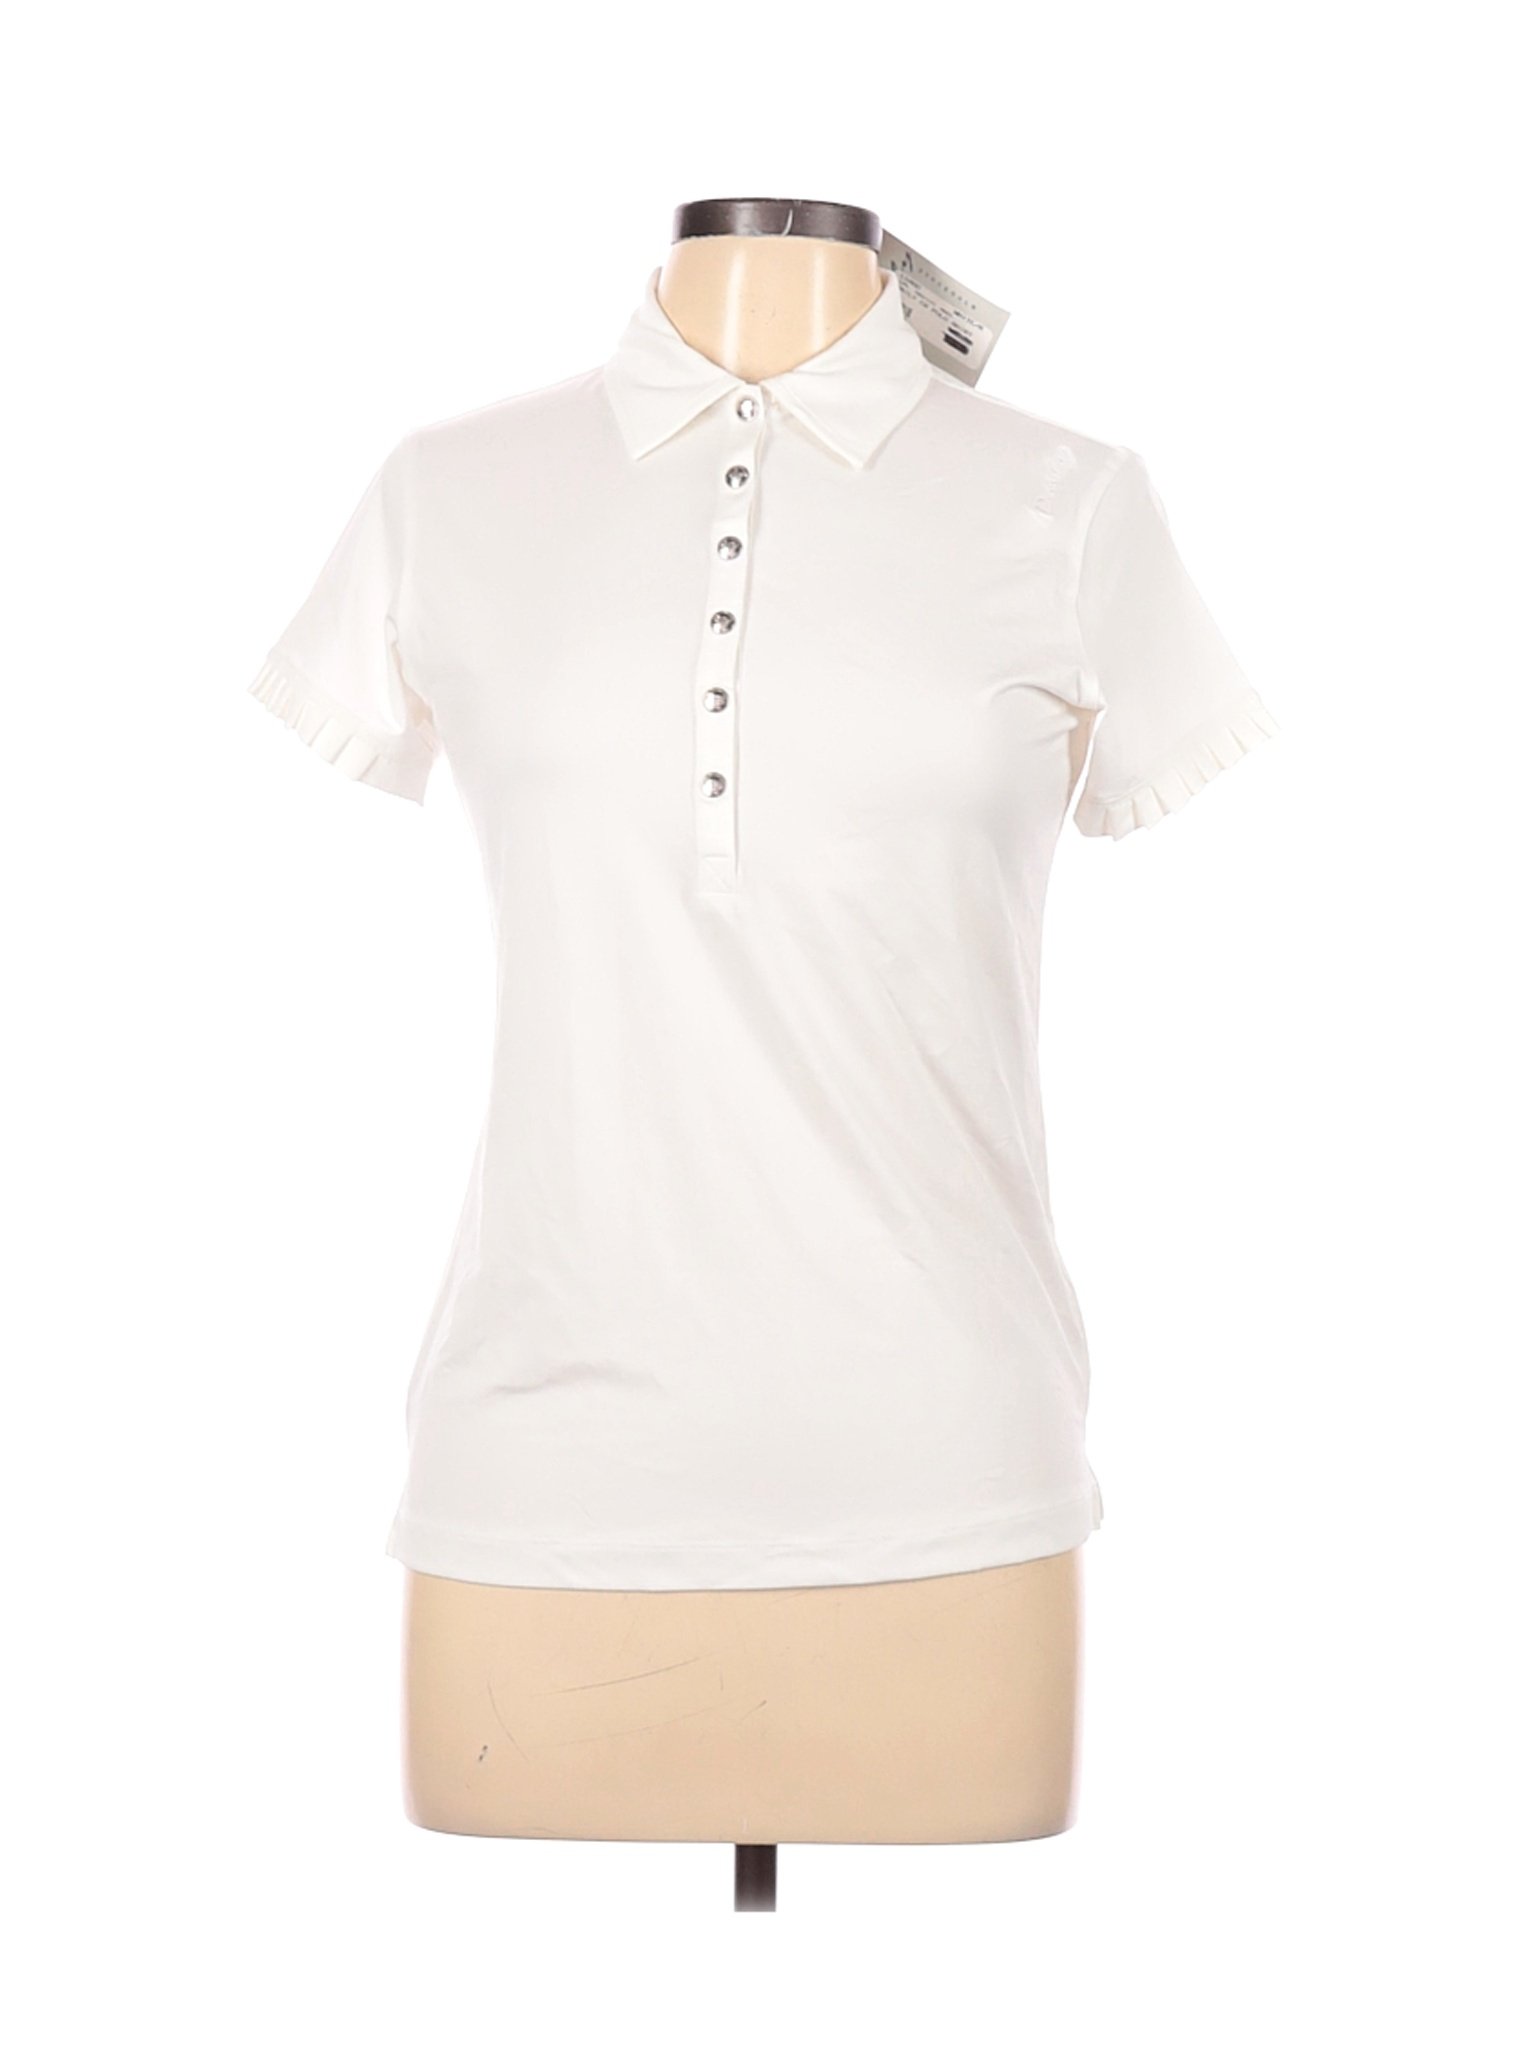 NWT Daily Sports Women White Short Sleeve Polo M | eBay